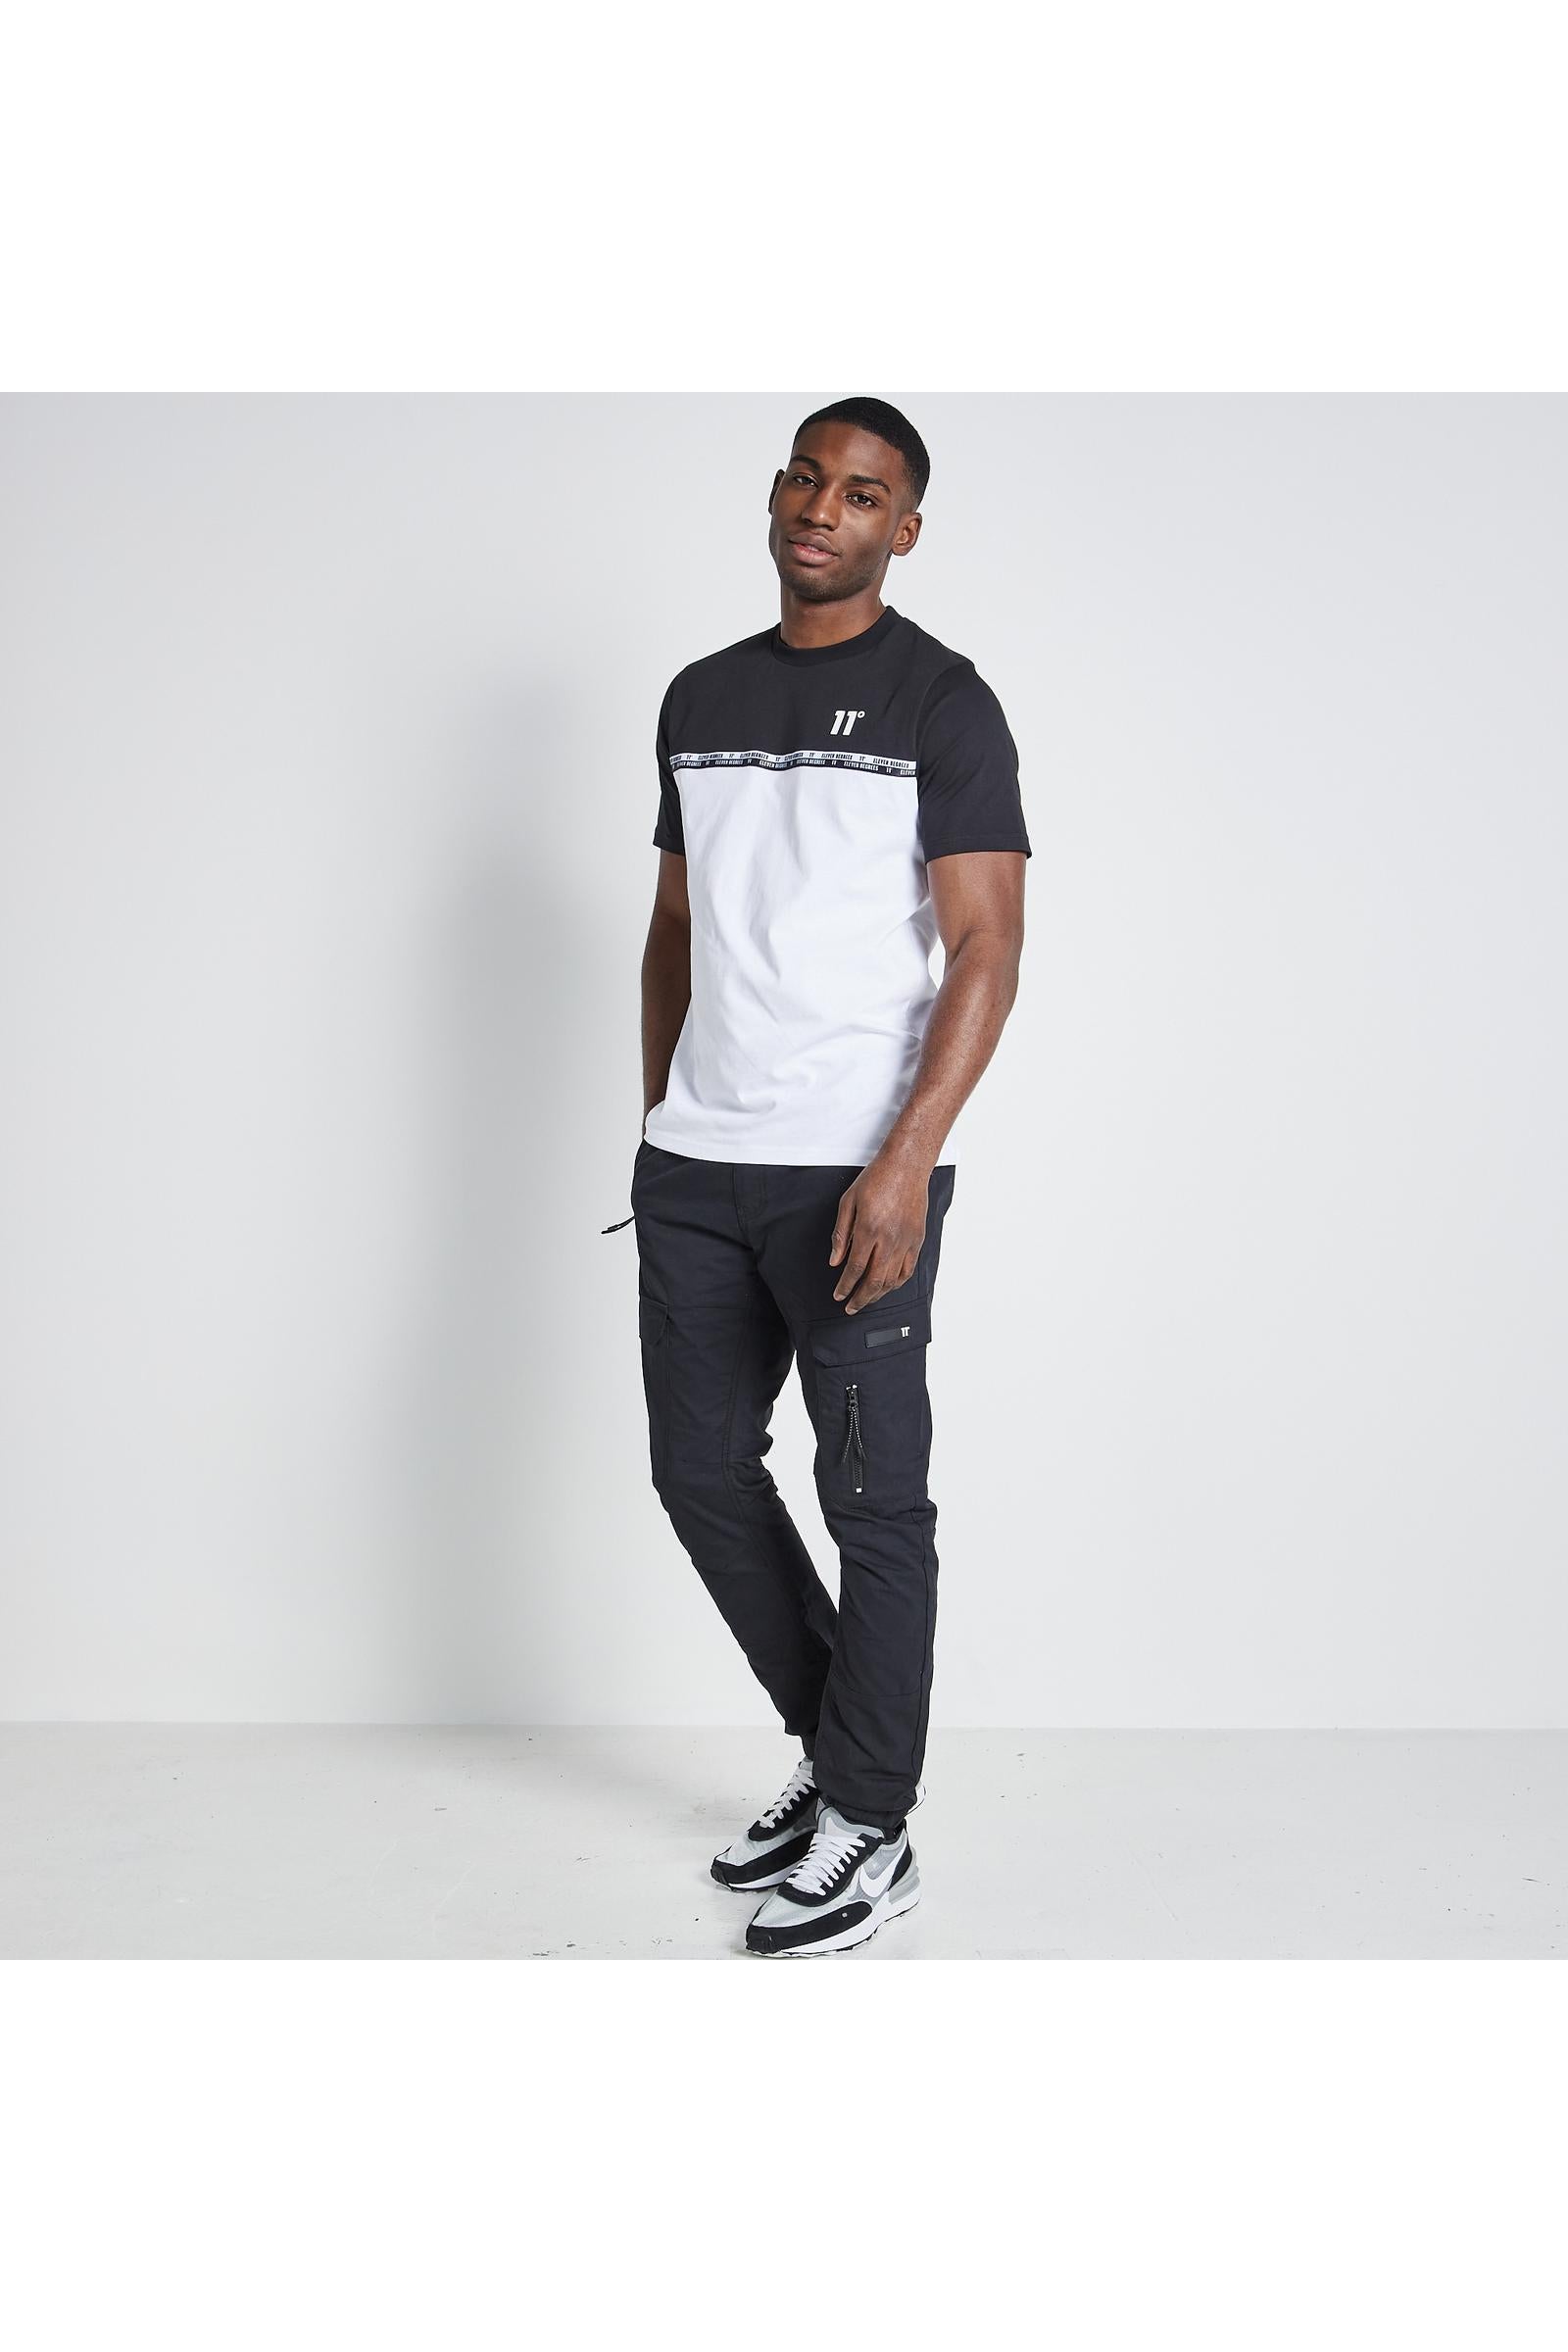 Double Taped T-Shirt - Black / White-Full model view